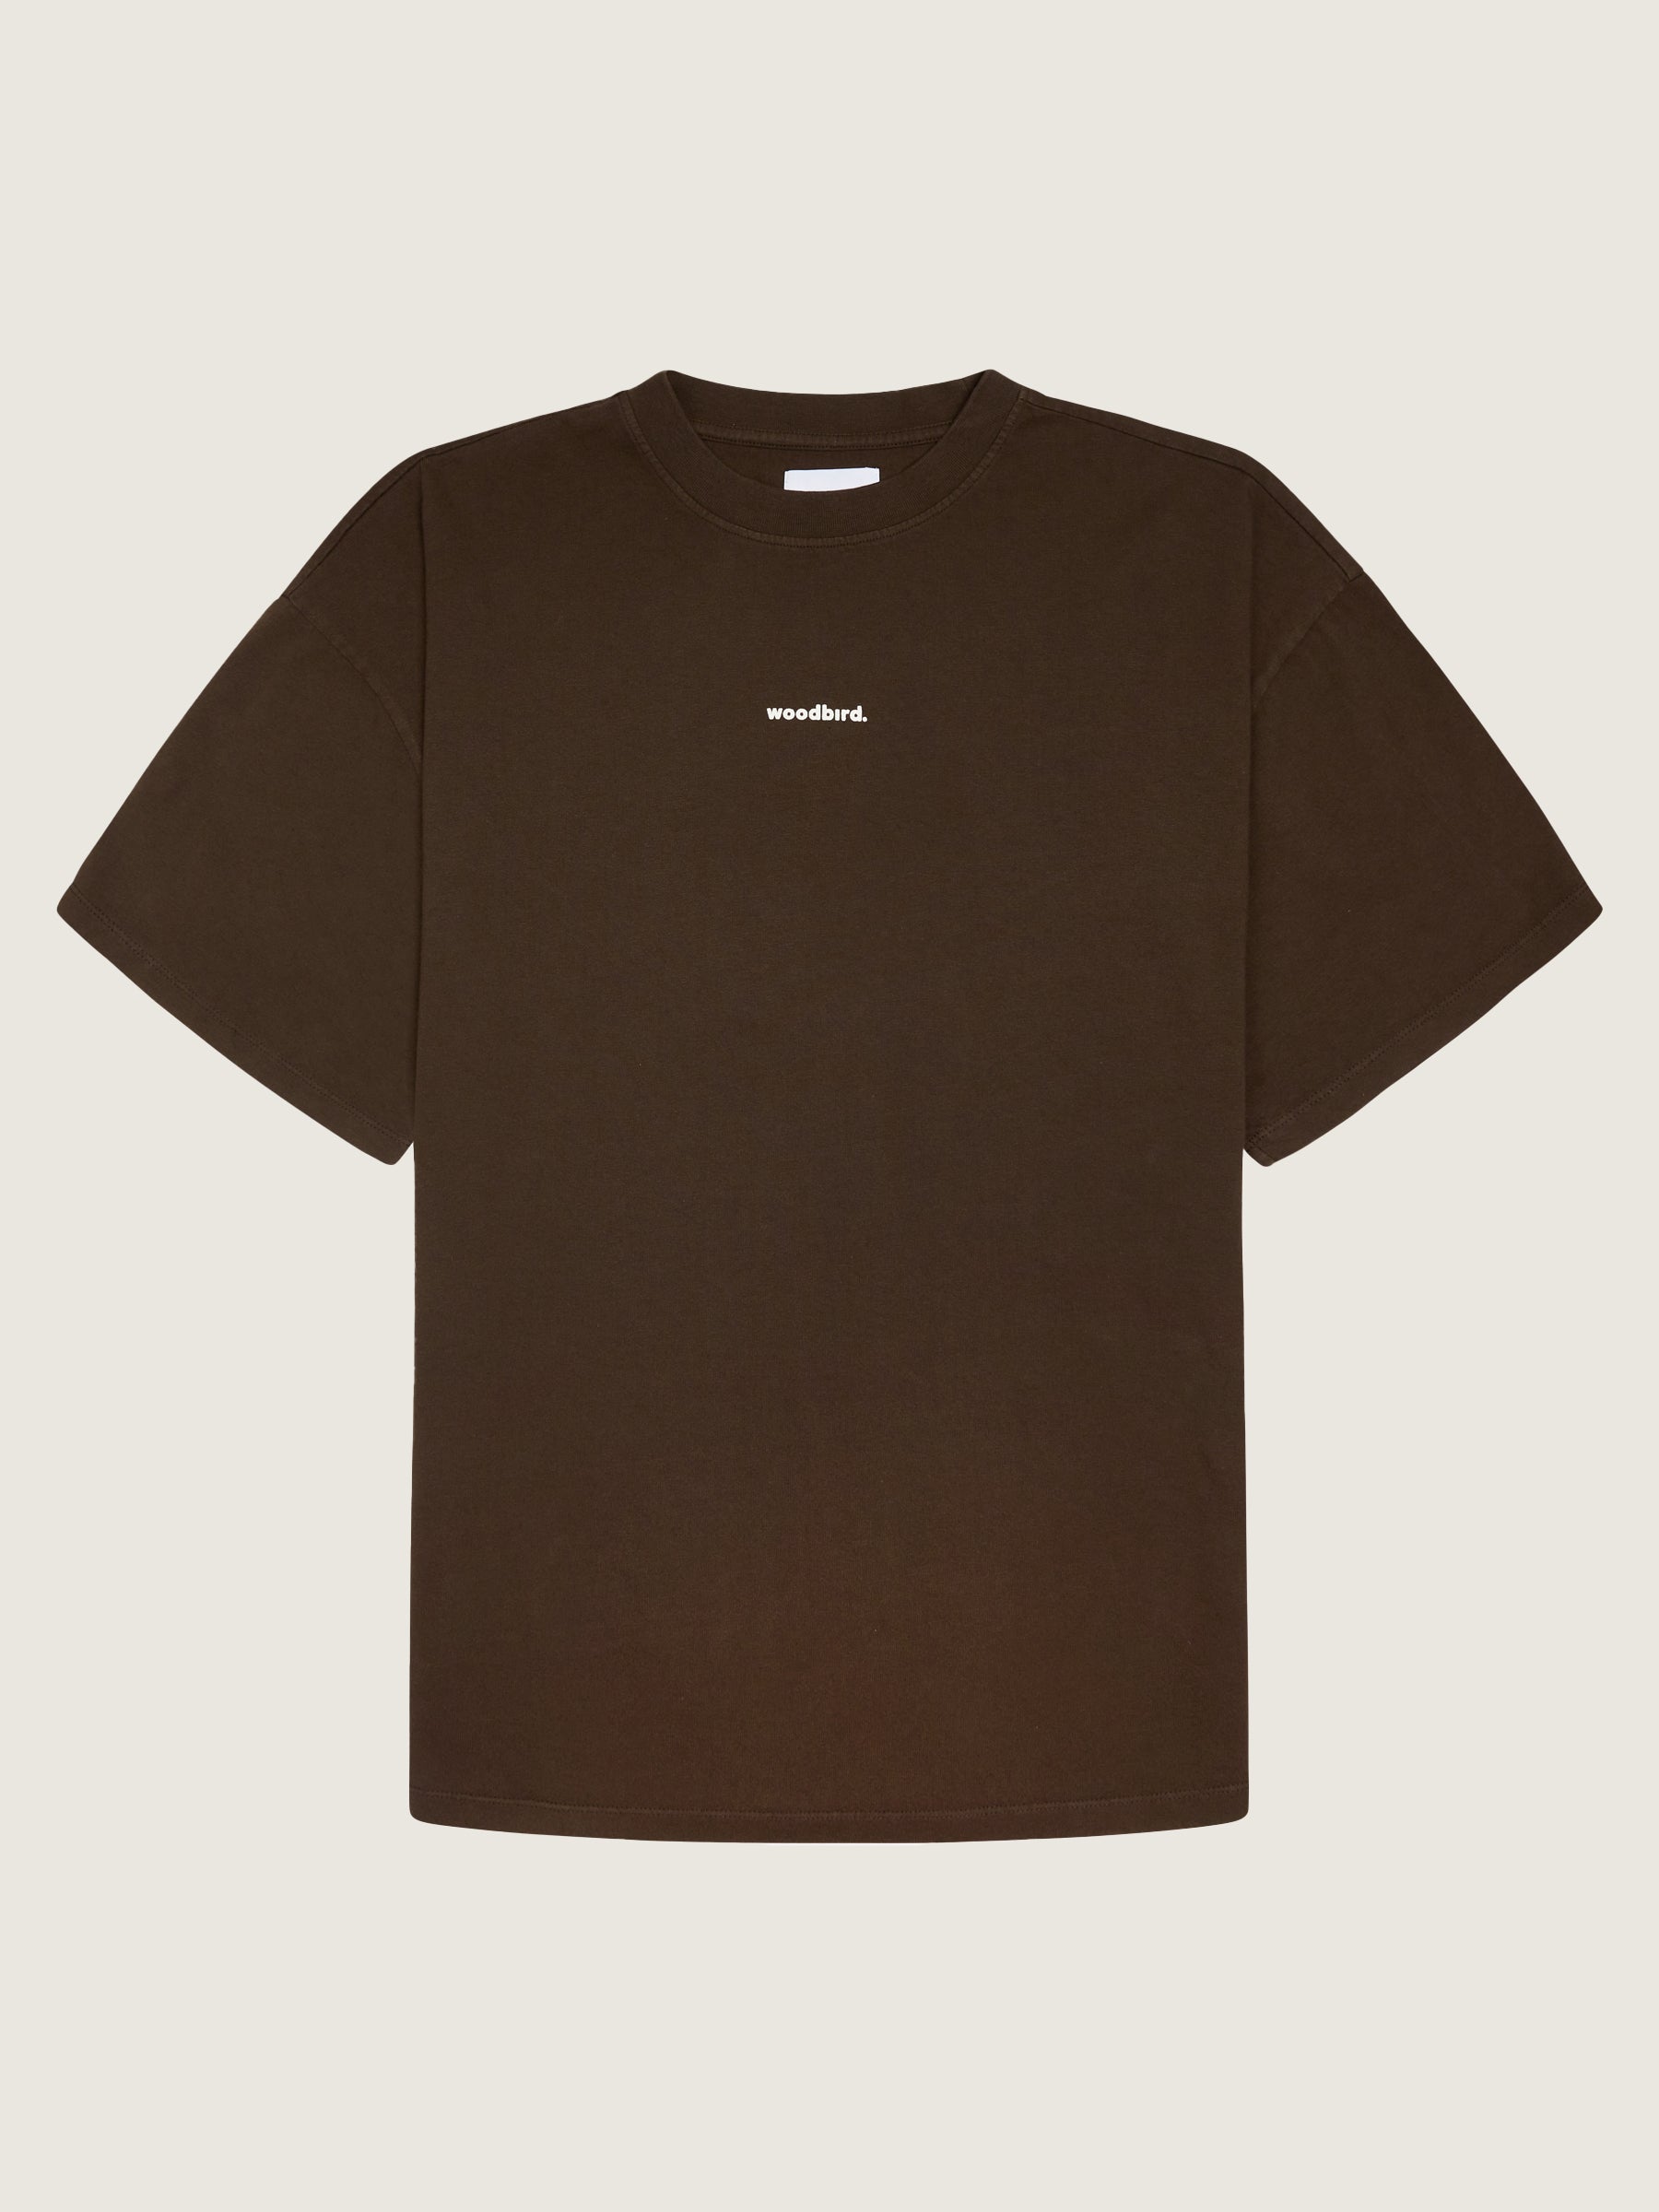 Woodbird Bose Mock Tee T-Shirts Brown